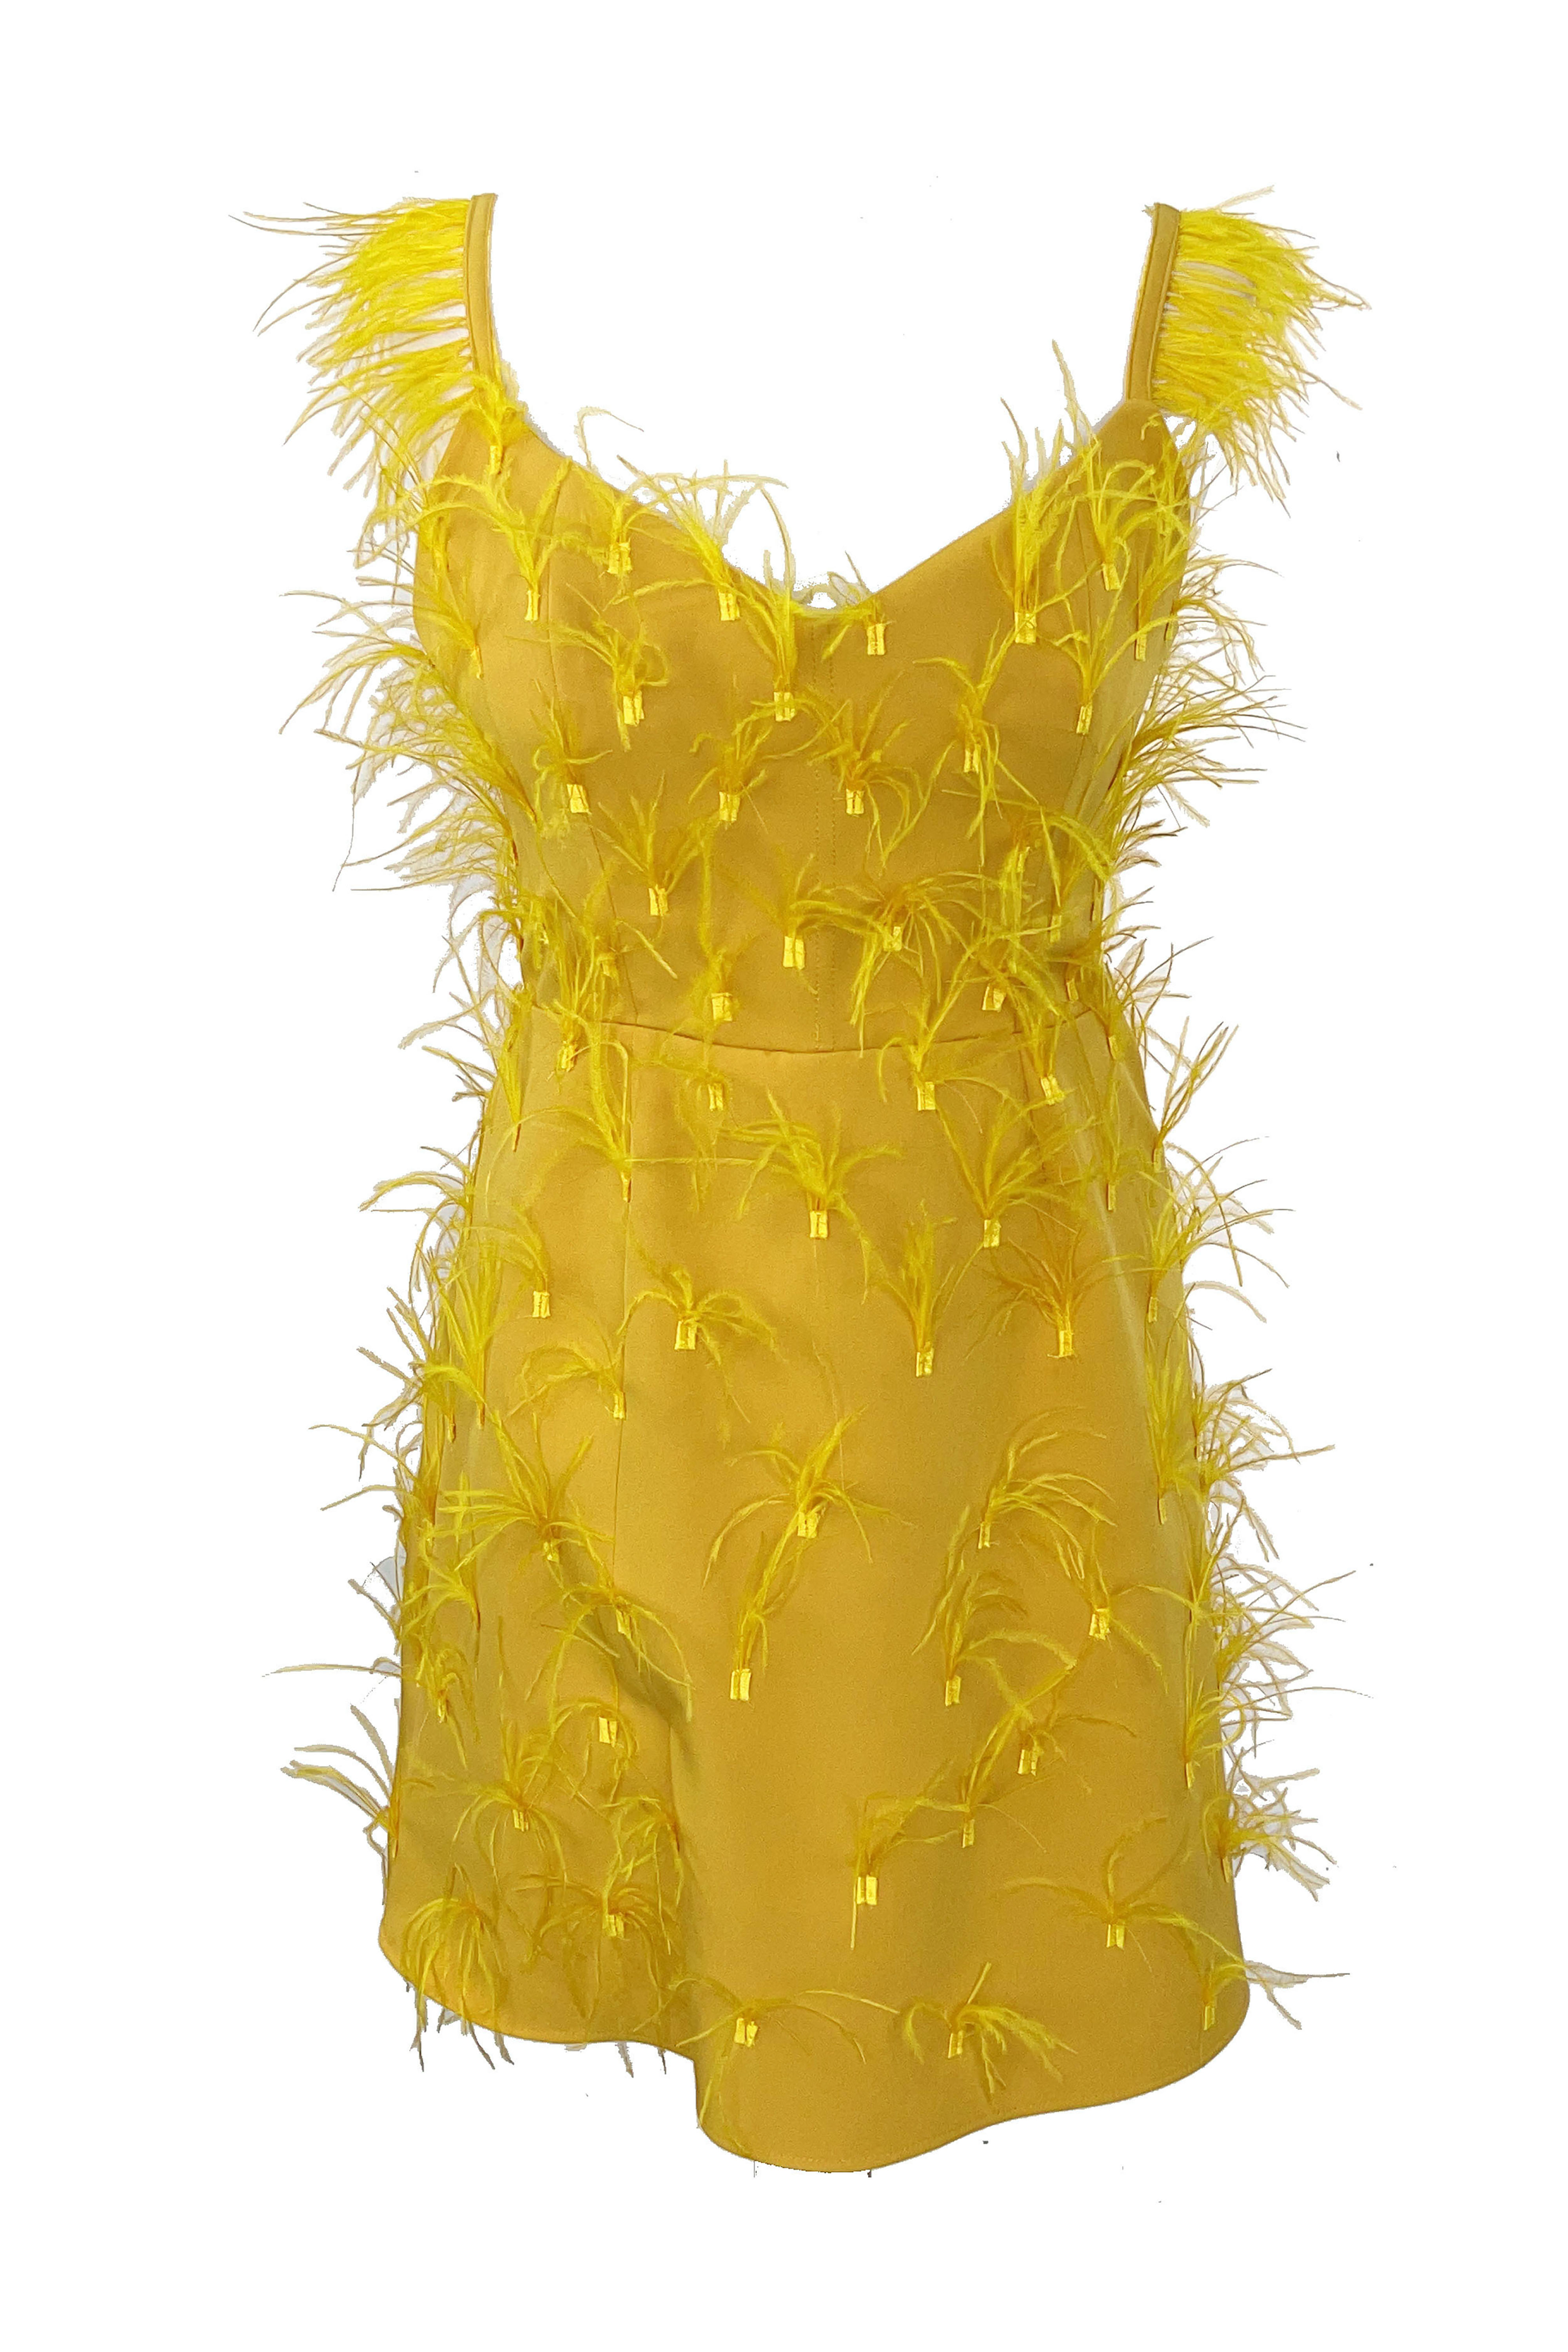 R24106 - OCHRE 01 - OLYMPIA ochre yellow mini dress with feathers - AMBAR STUDIO